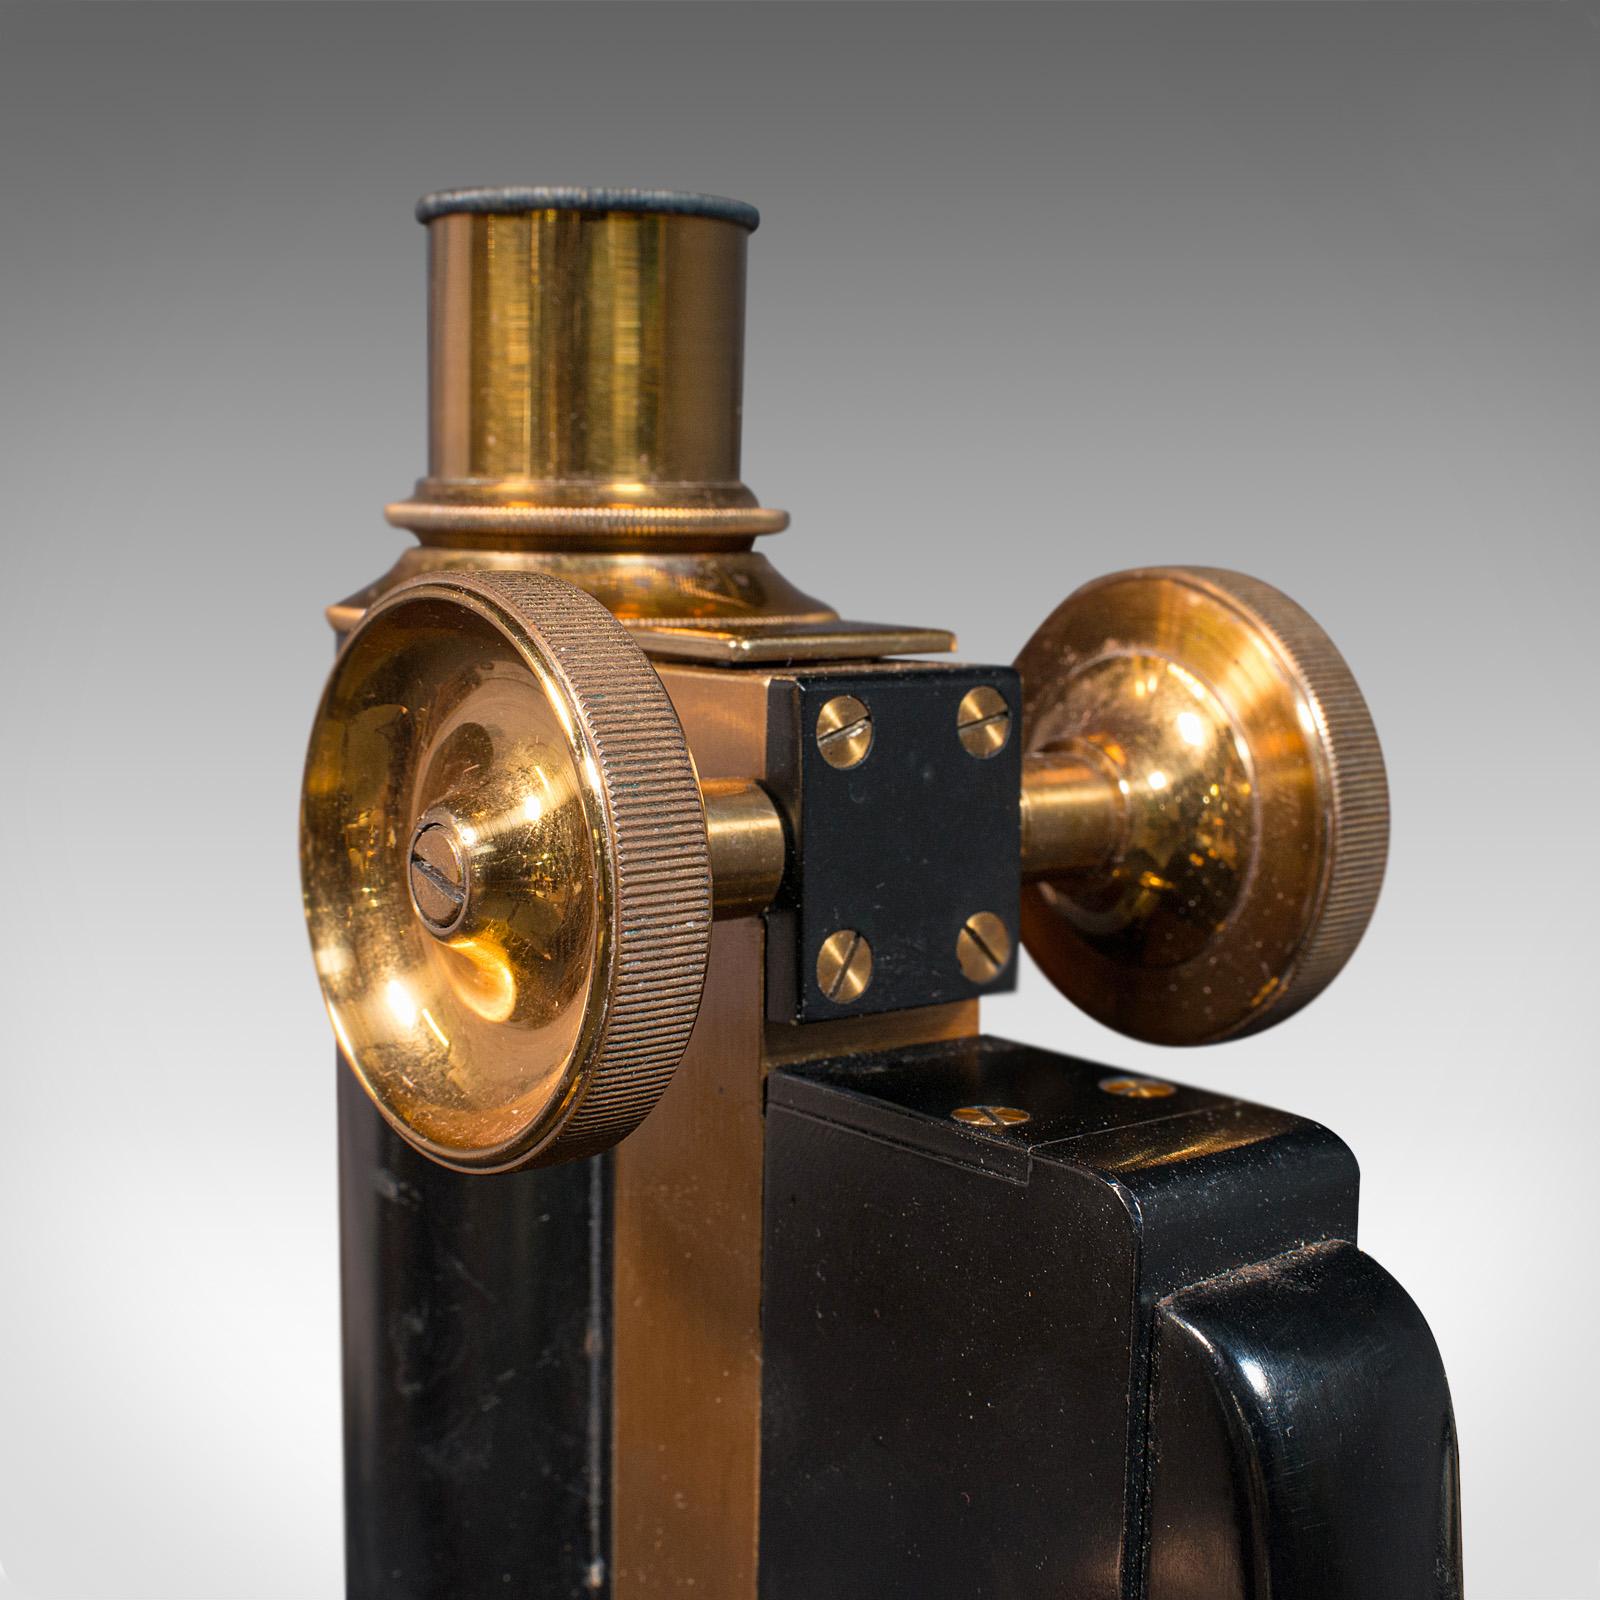 20th Century Antique Cased Microscope, English, Scientific Instrument, Watson of London, 1920